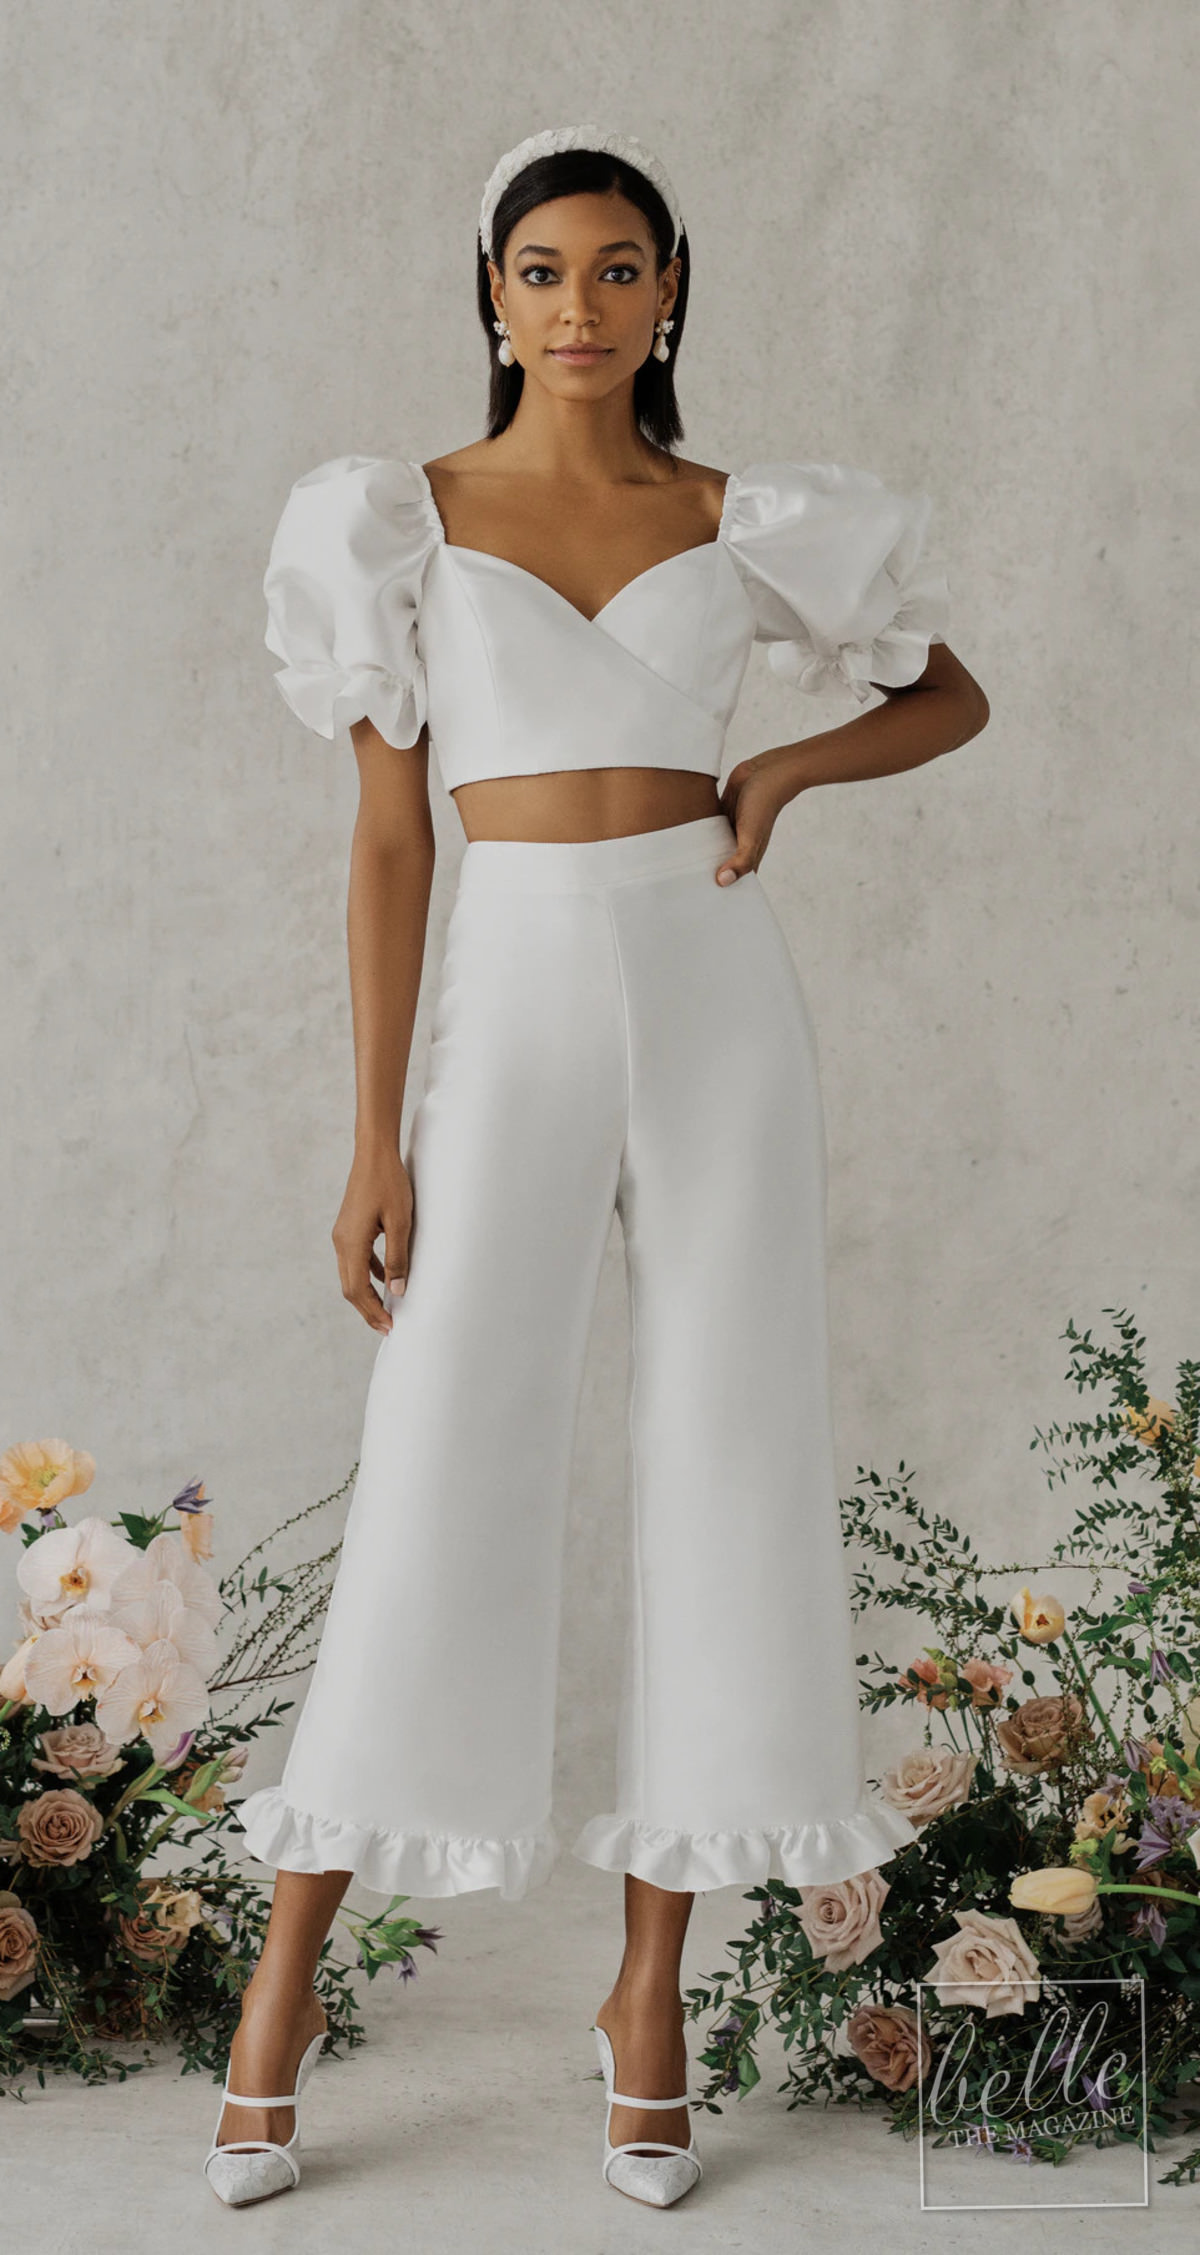 Wedding dress trends 2021 - Mini dresses and separates - Alexandra Greco Spring 2021